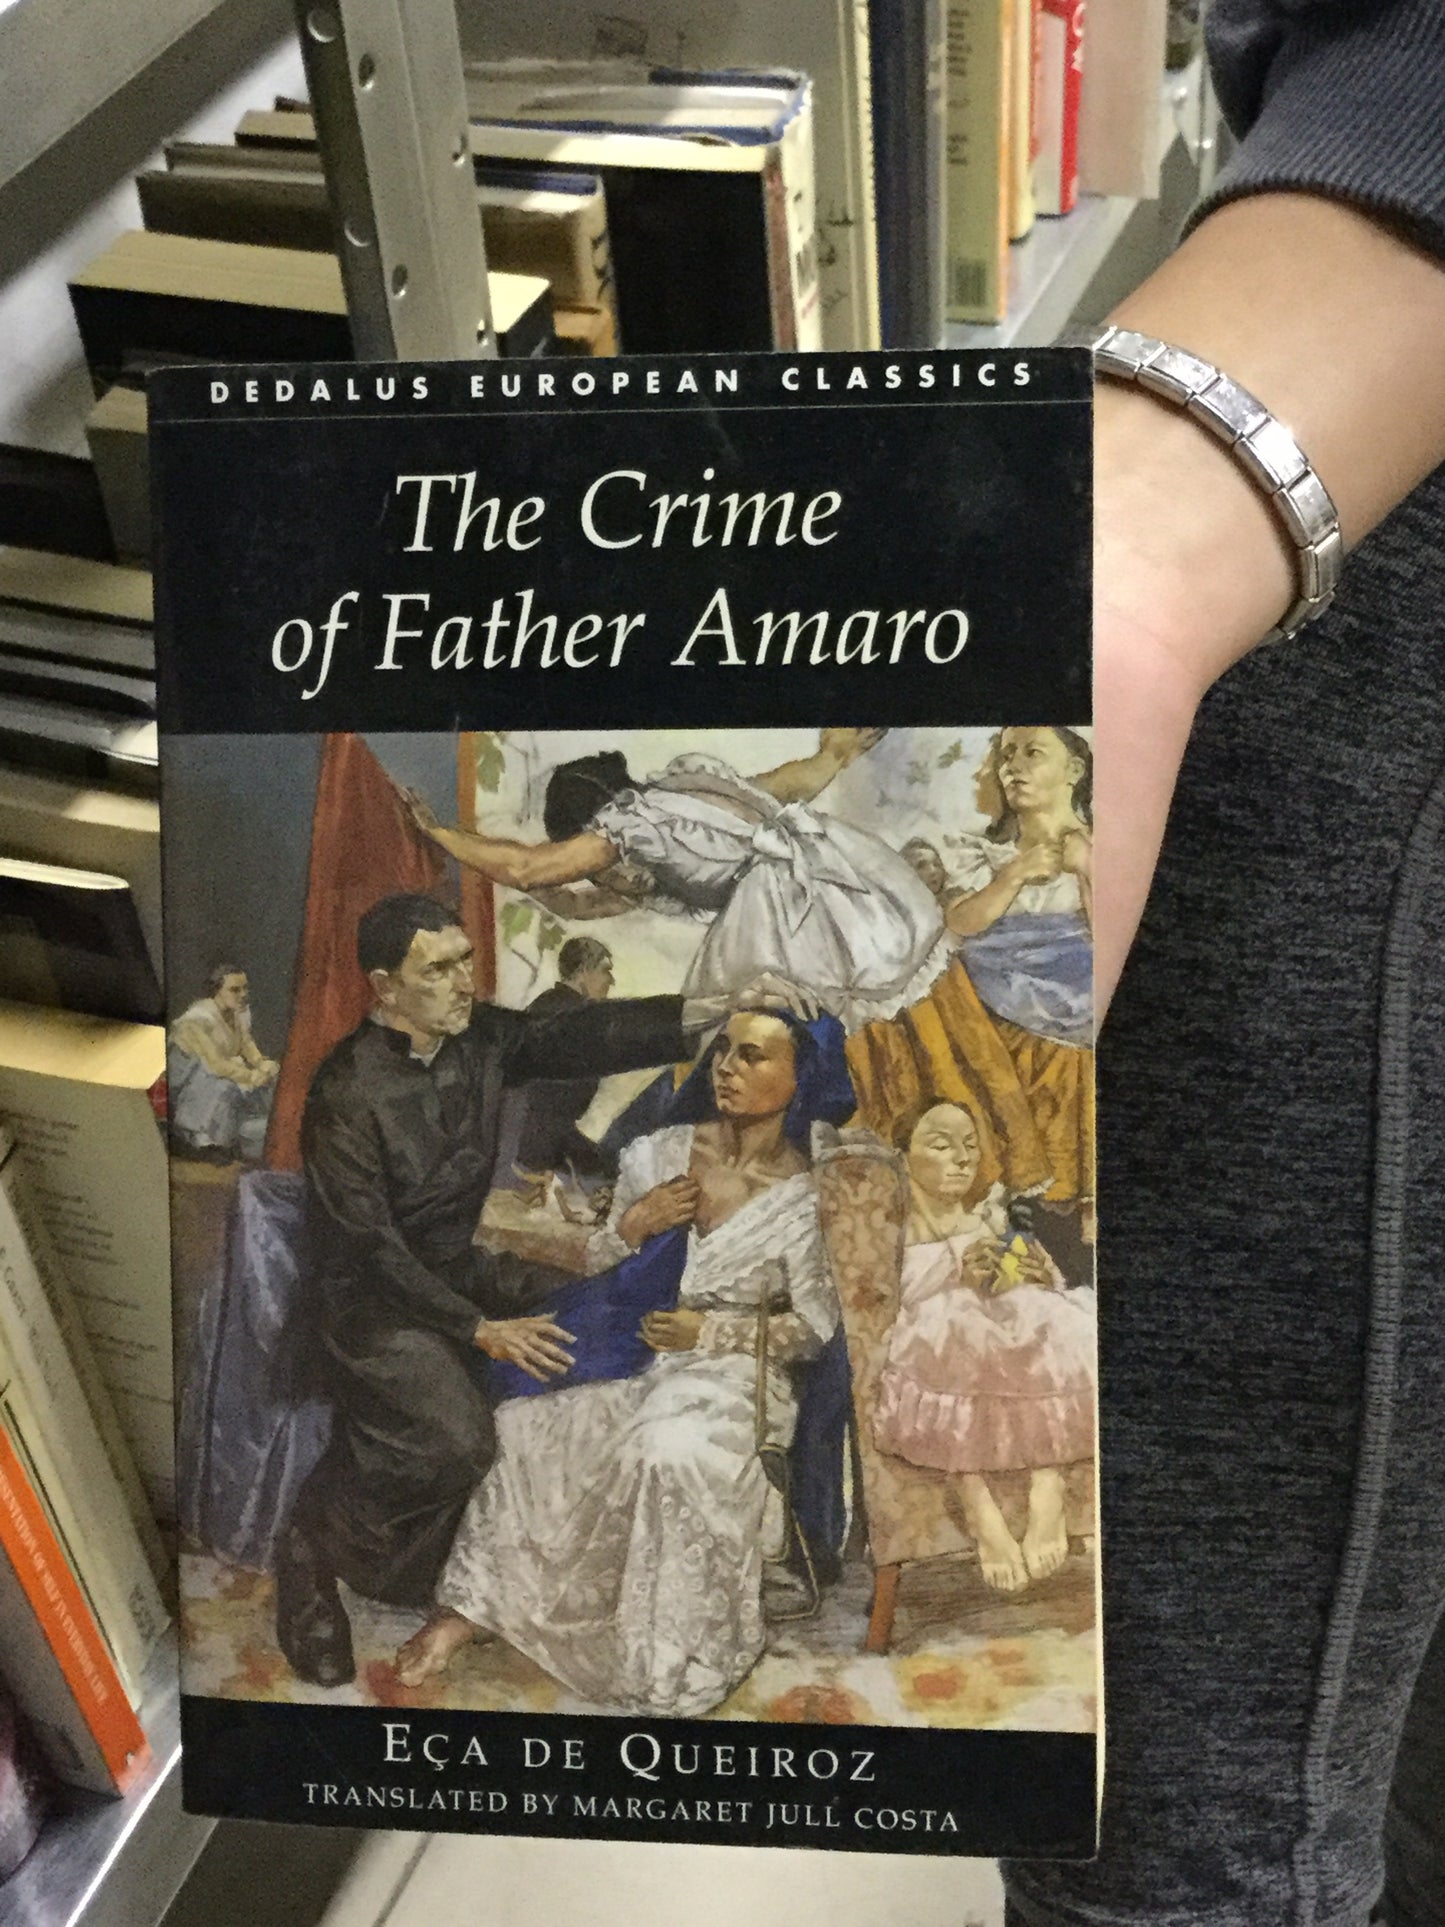 The crime of father amaro